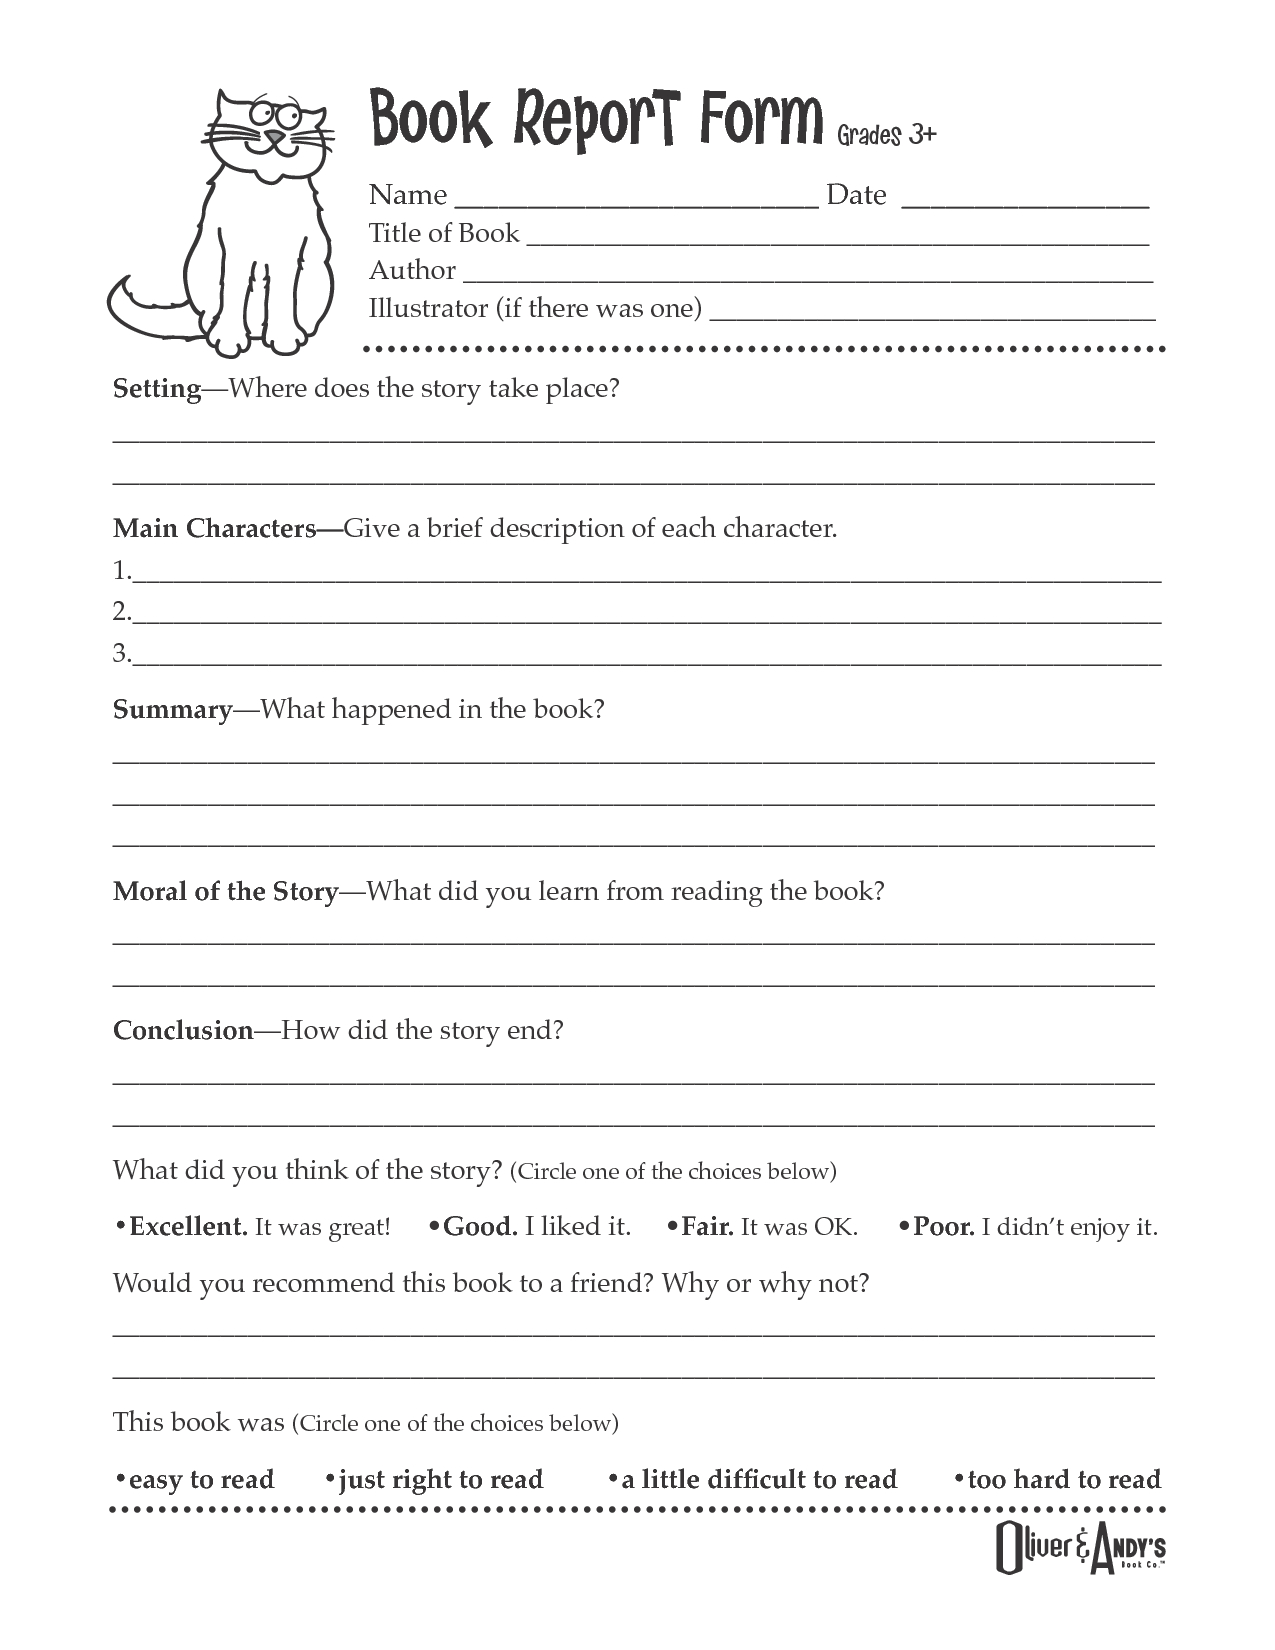 Second Grade Book Report Template | Book Report Form Grades With Regard To Book Report Template 2Nd Grade